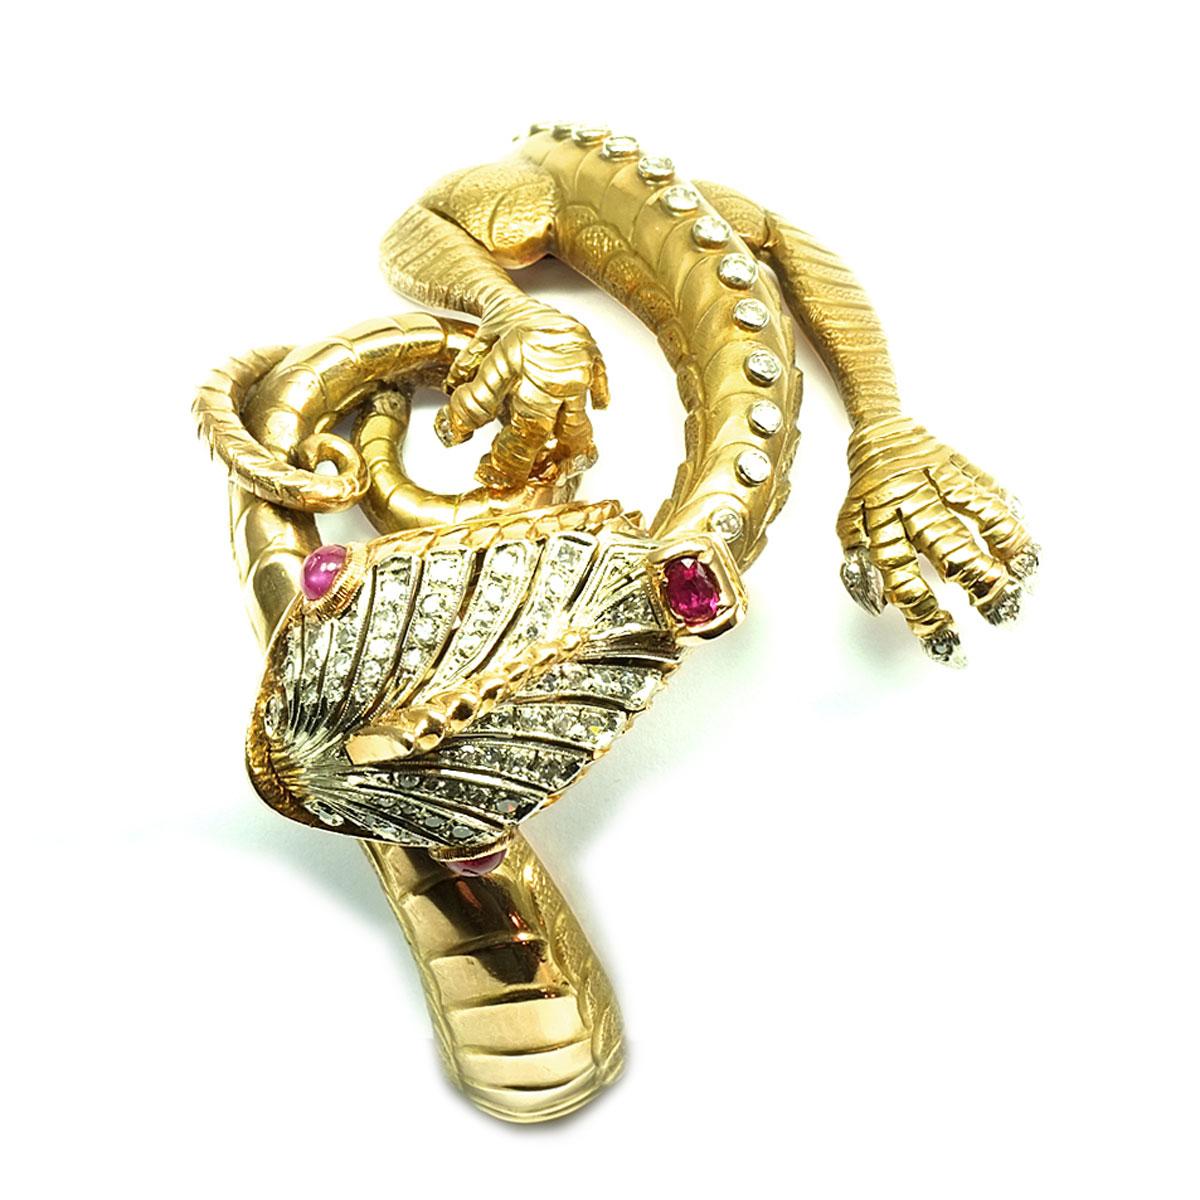 2 Carat Diamond Rubies and 18 K Gold Dragon Bangle Bracelet Italy circa 1960

